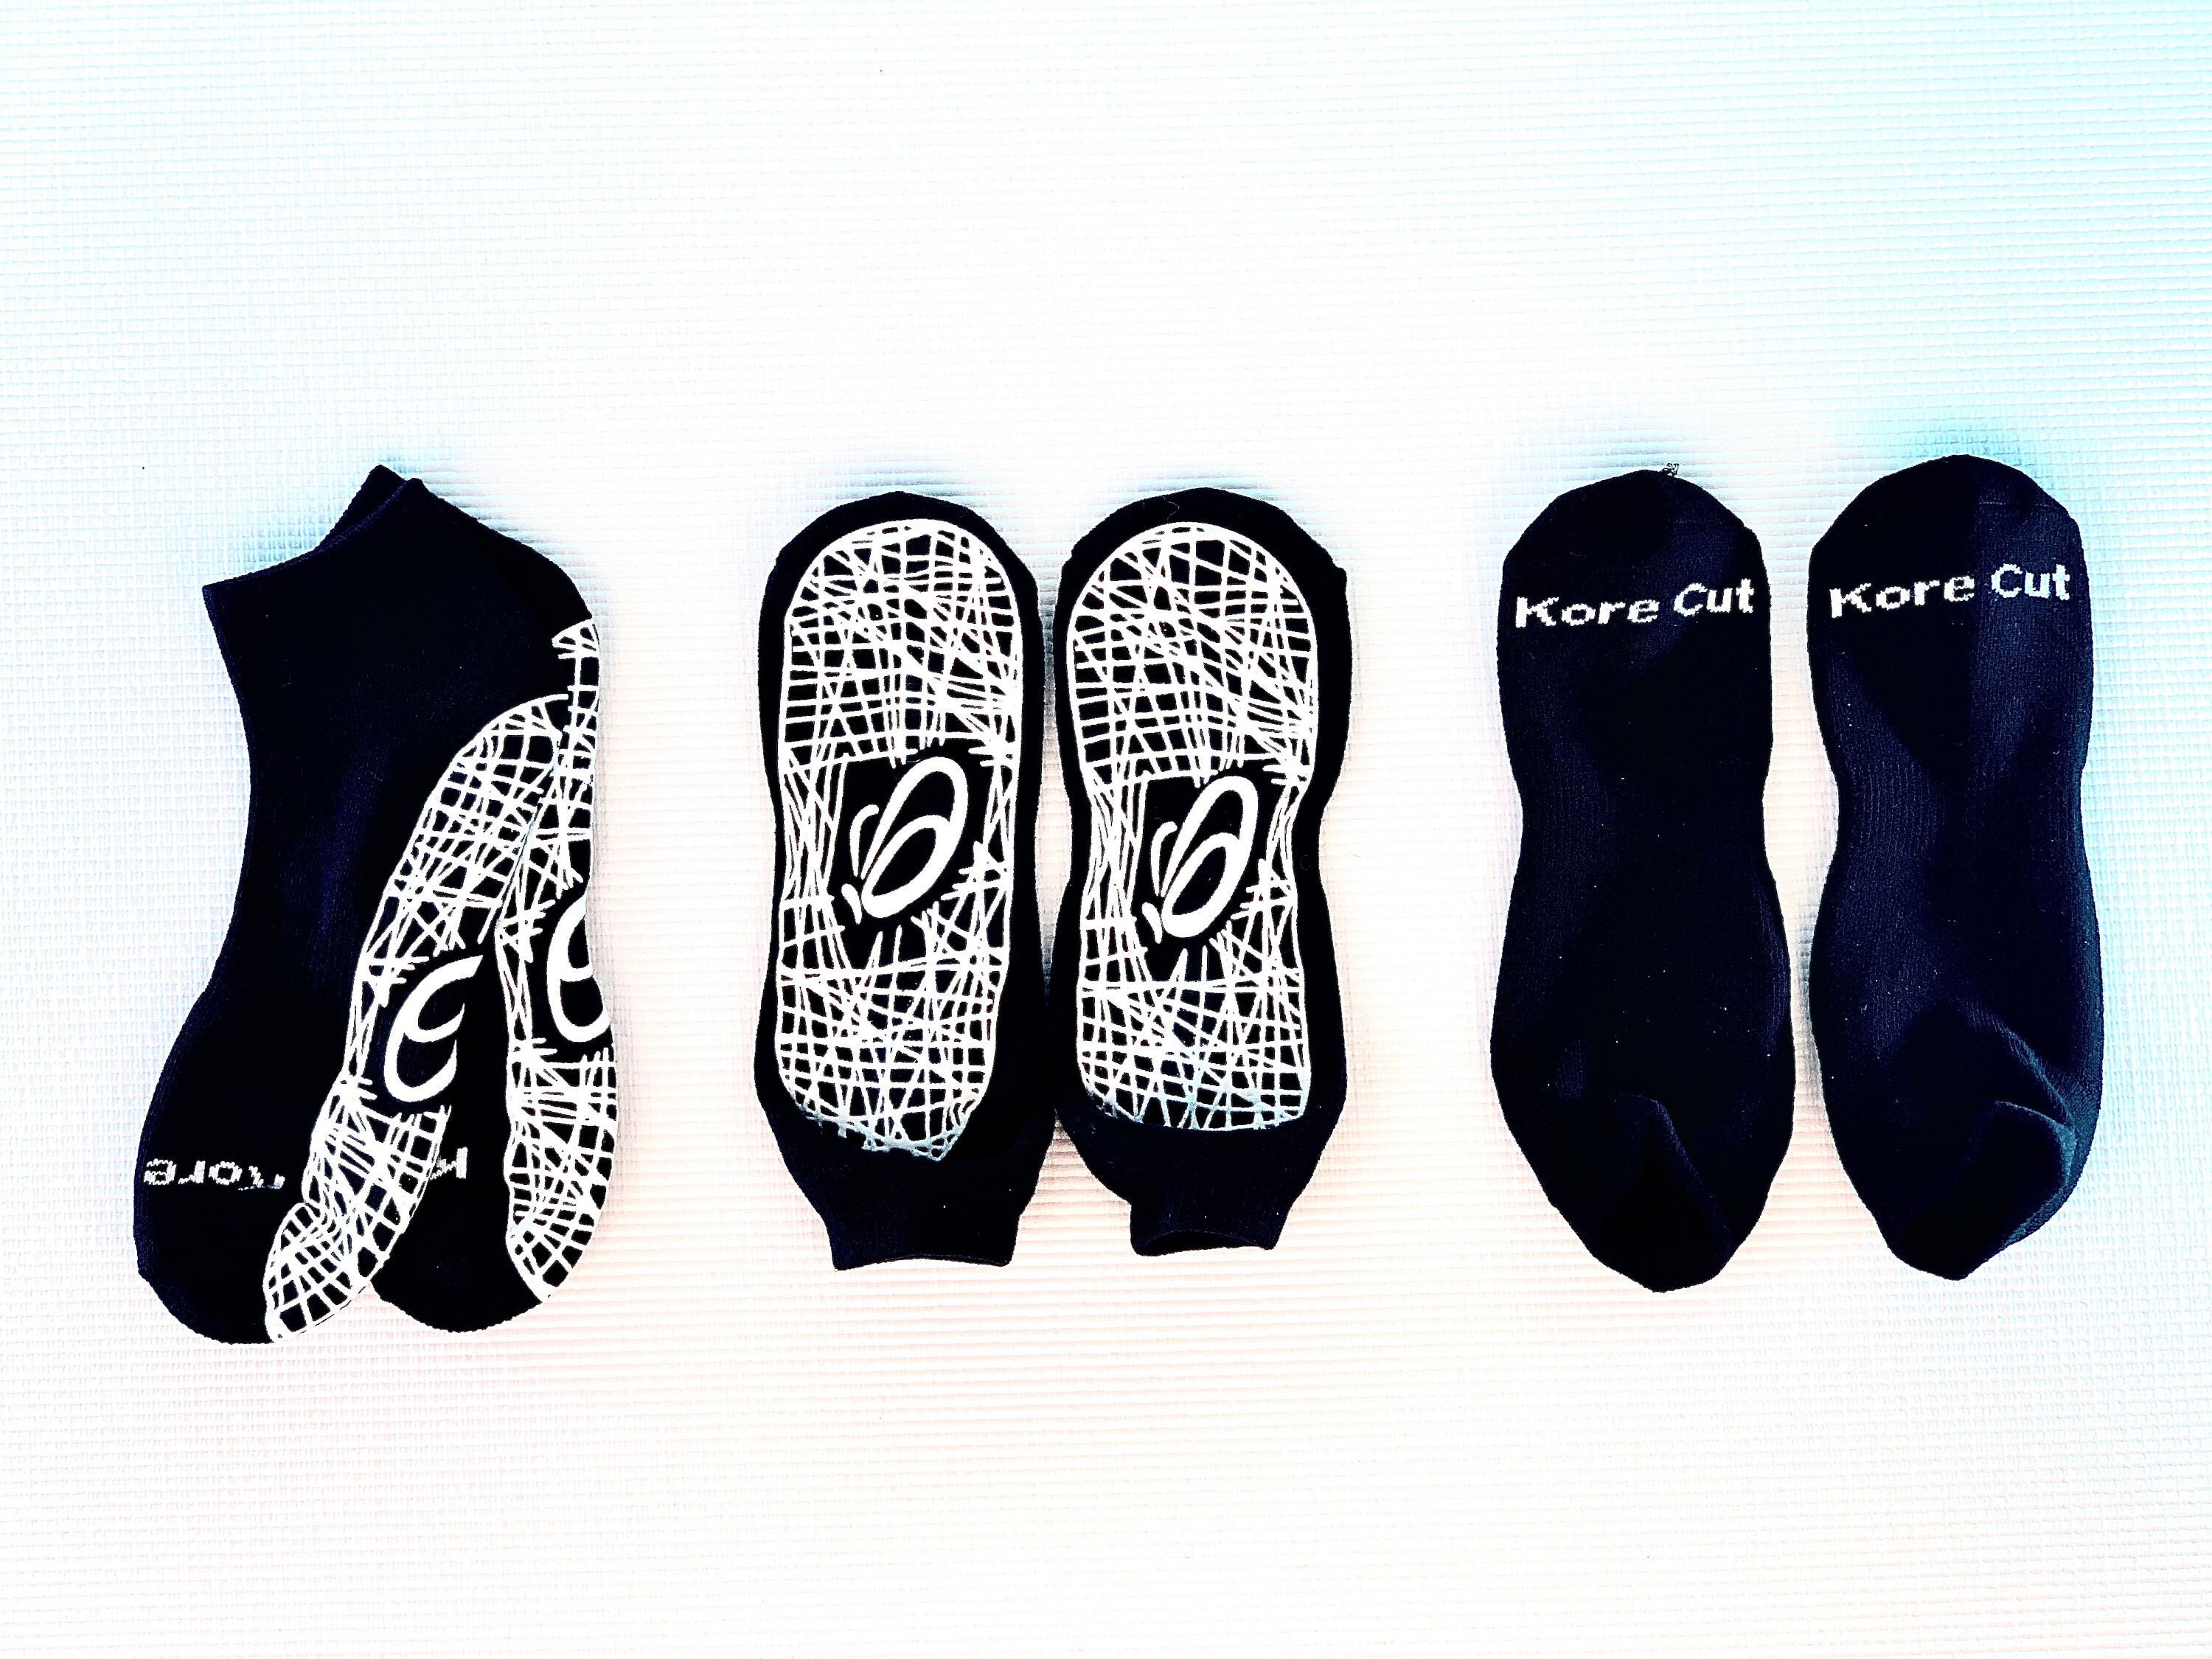 Custom Grippy Socks by Blissful Socks 55 Pairs, Personalized Socks